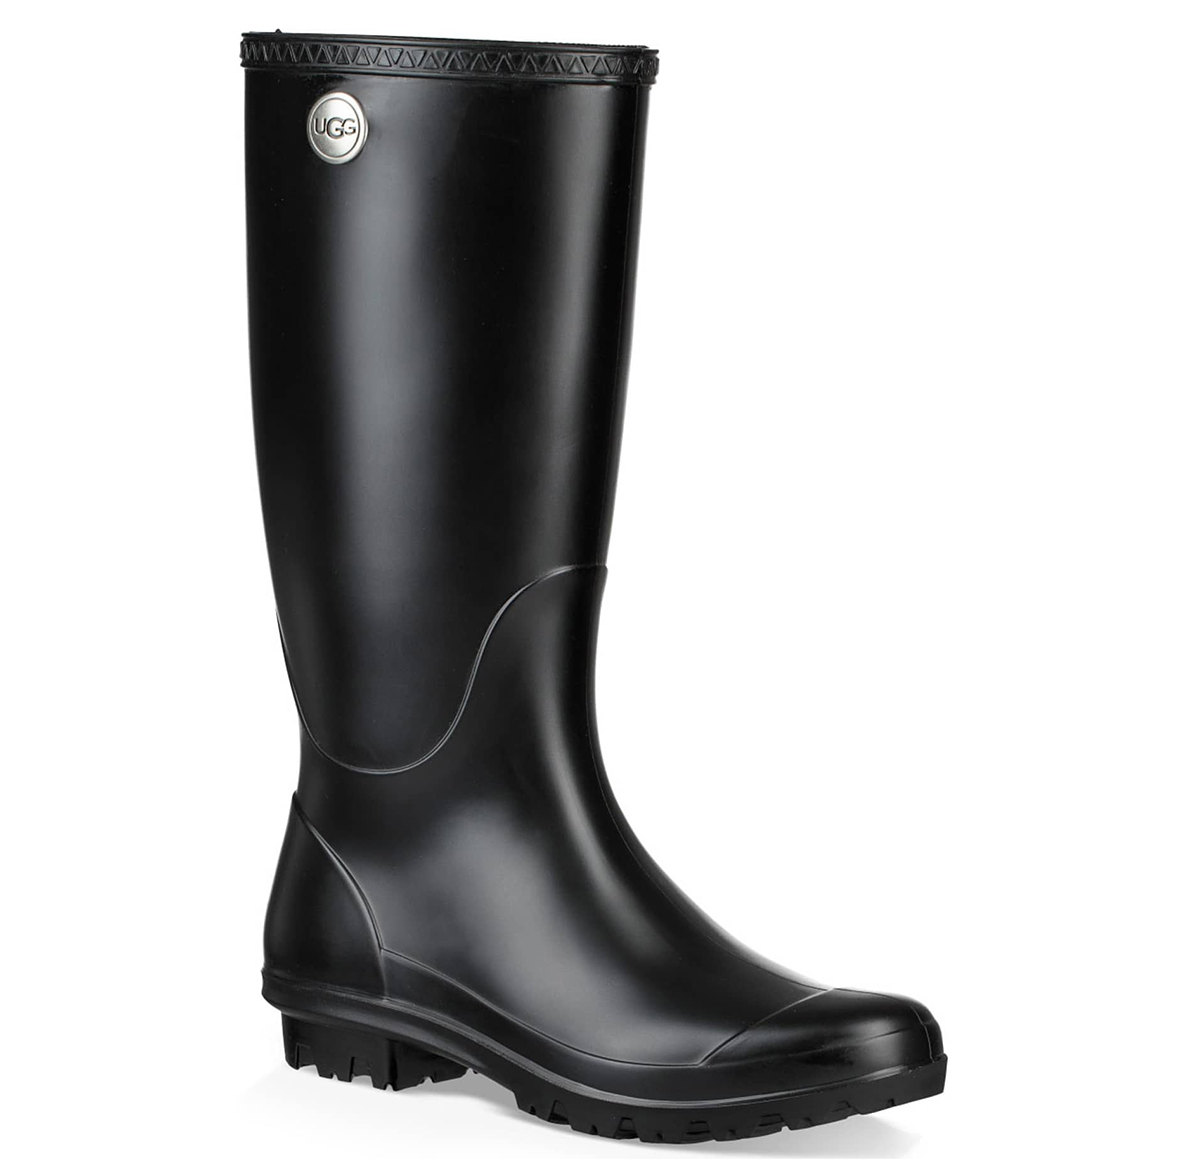 ugg or hunter rain boots